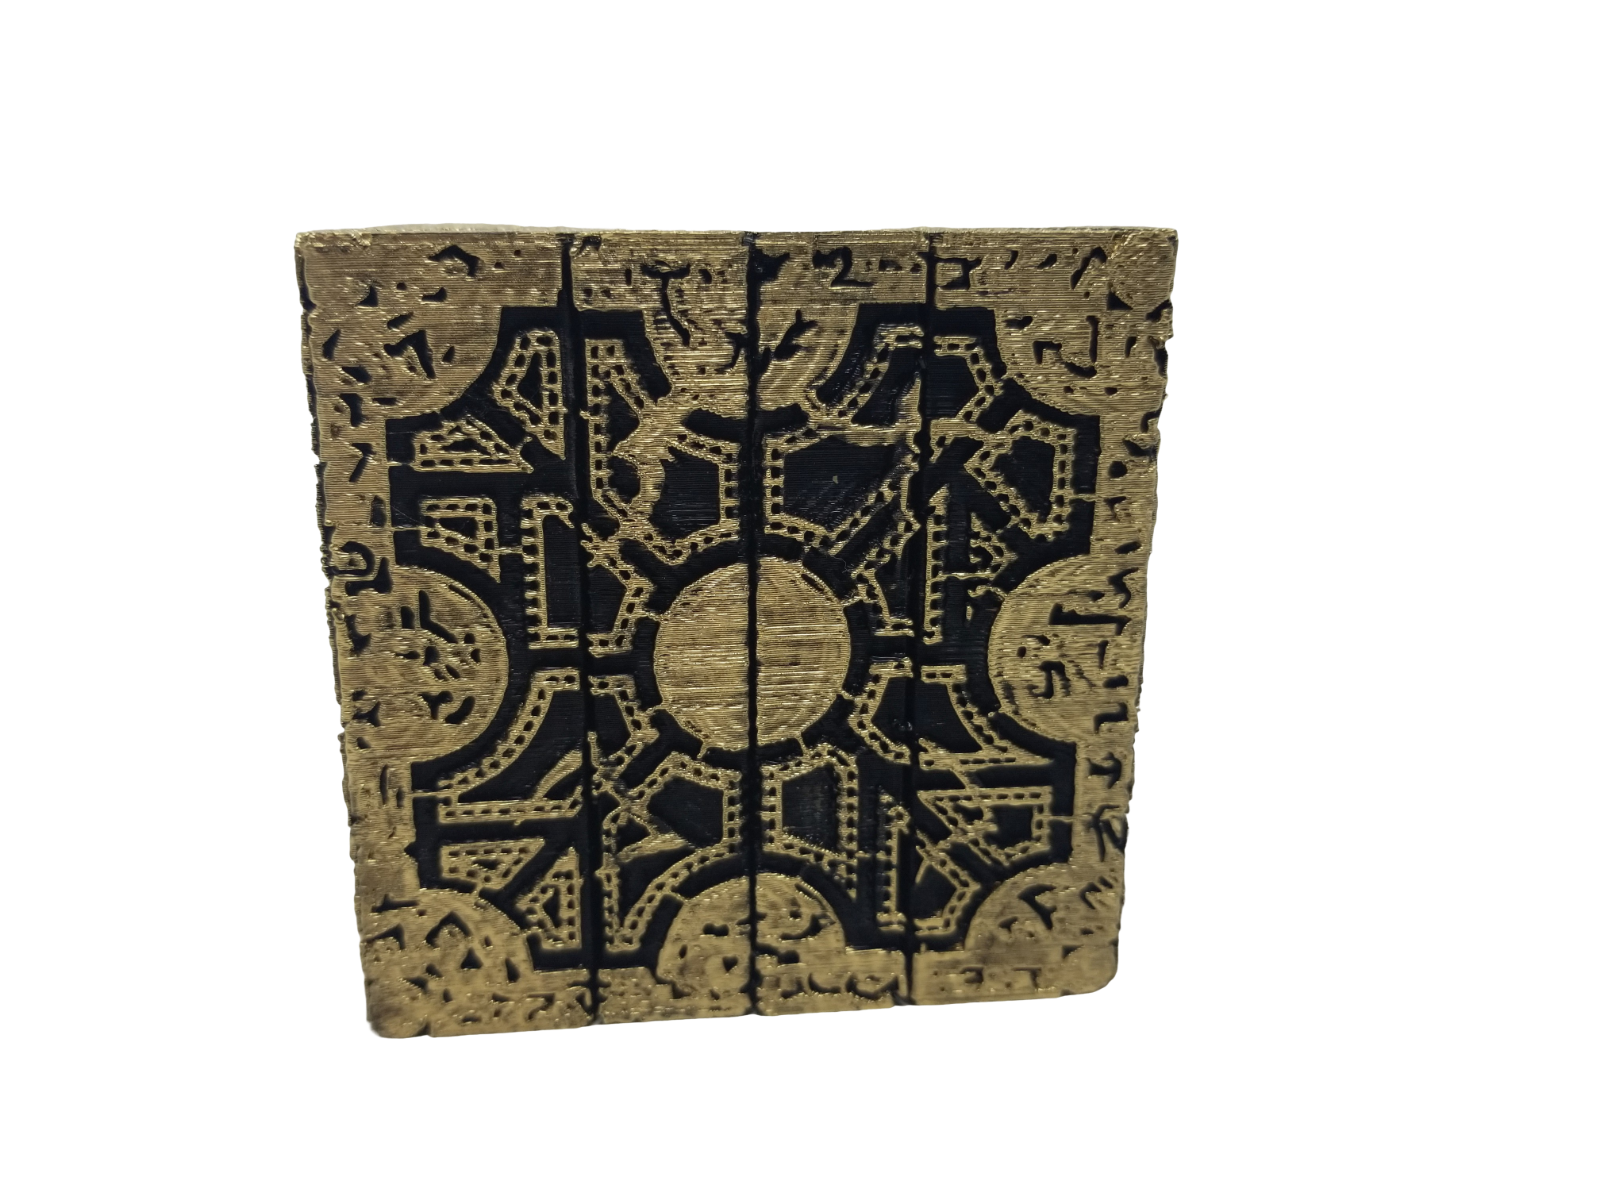 Hellraiser Cube Puzzle Box Lament Configuration  Functional Pinhead Prop Horror  Без бренда - фотография #8